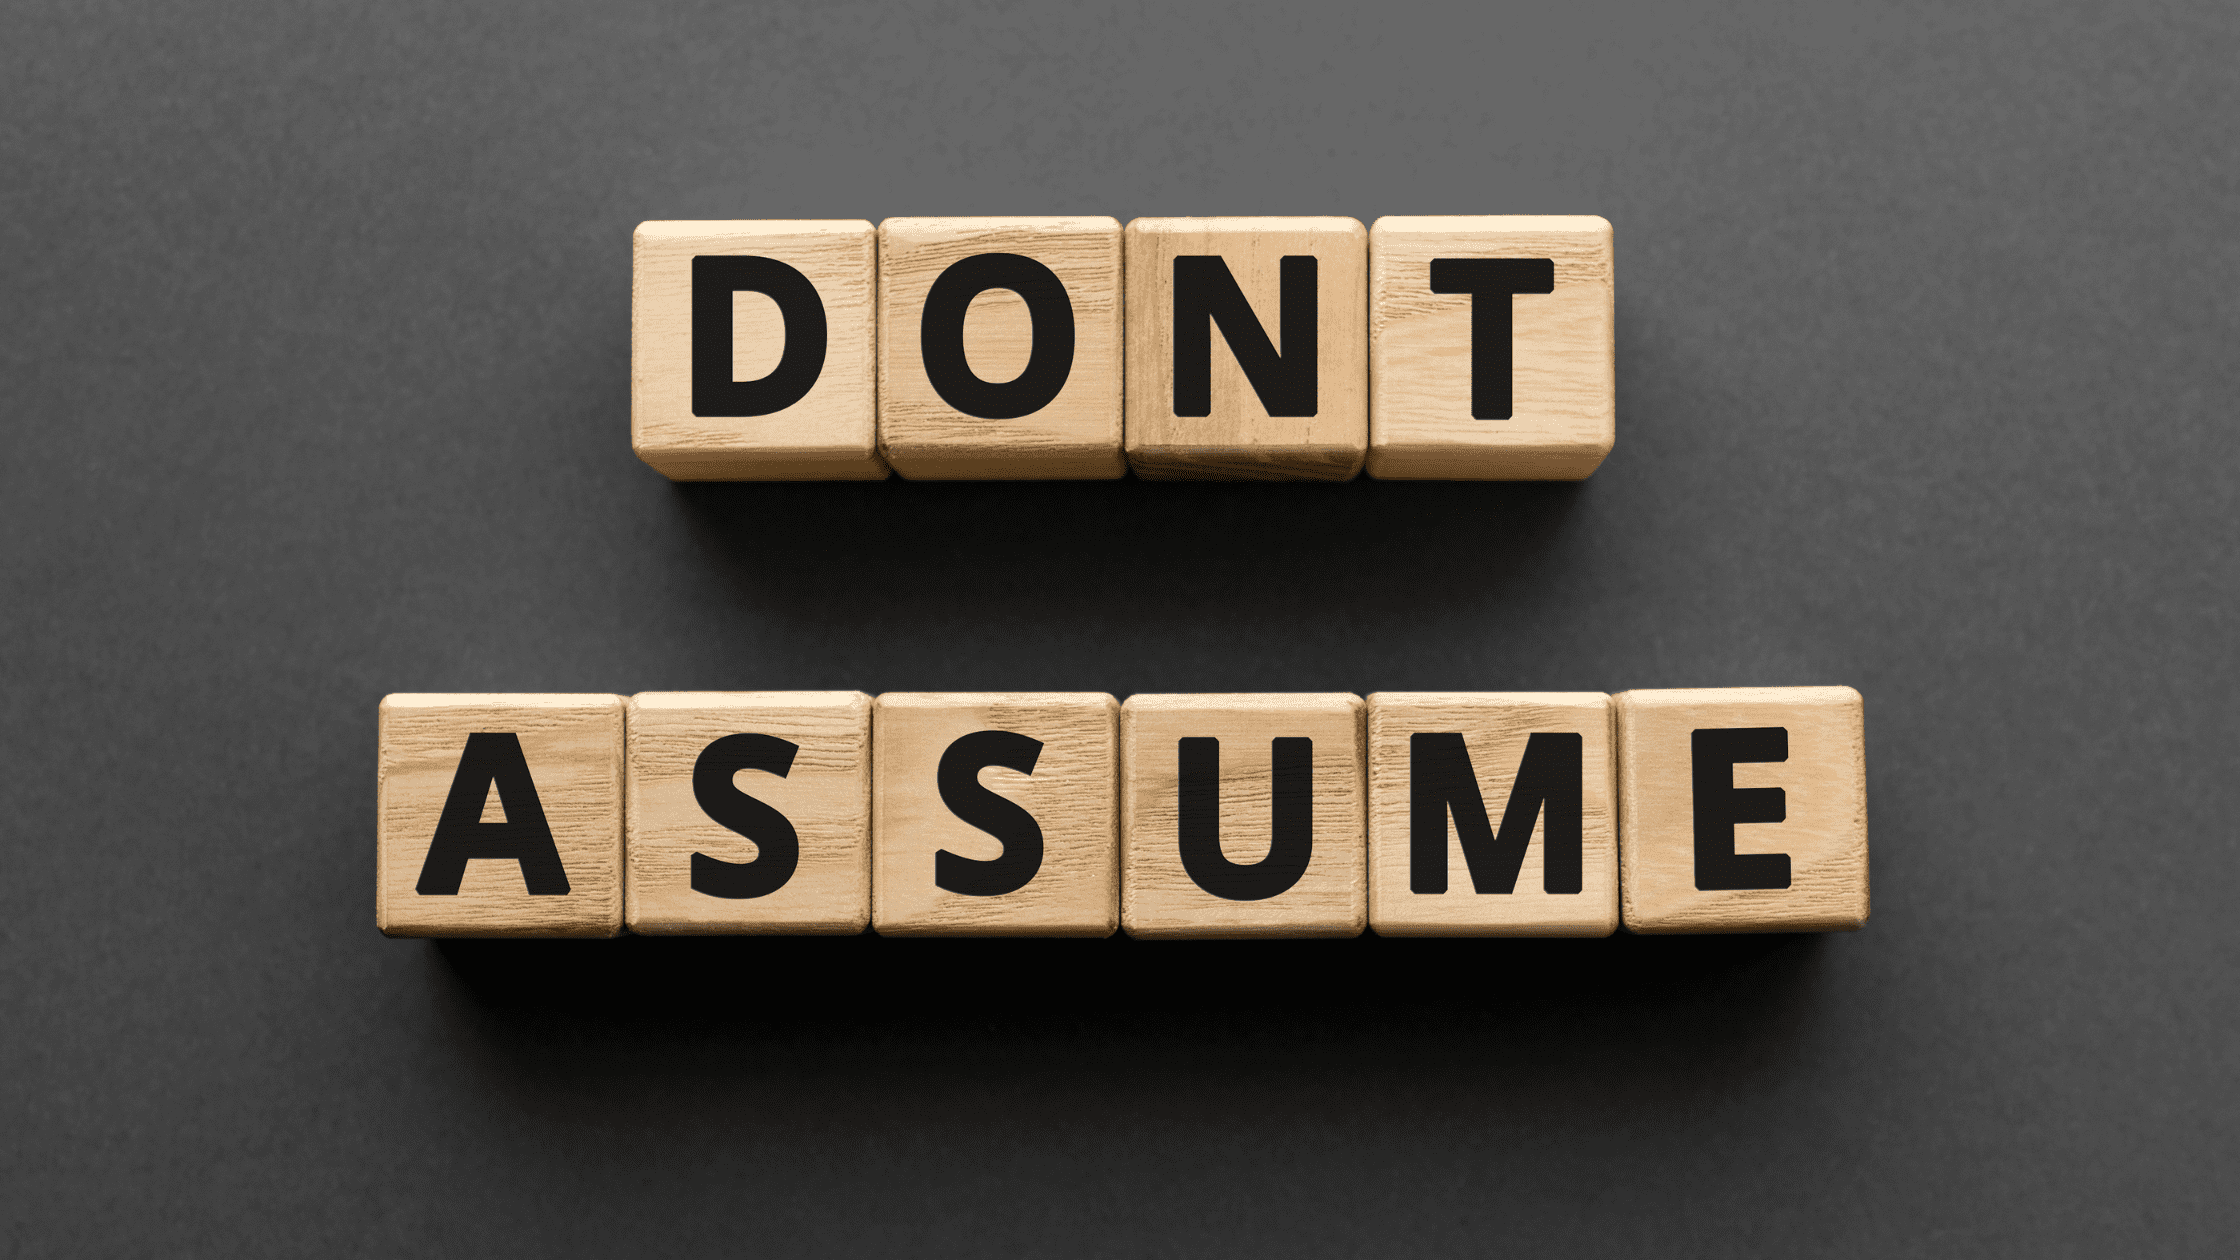 Avoid Making Assumptions